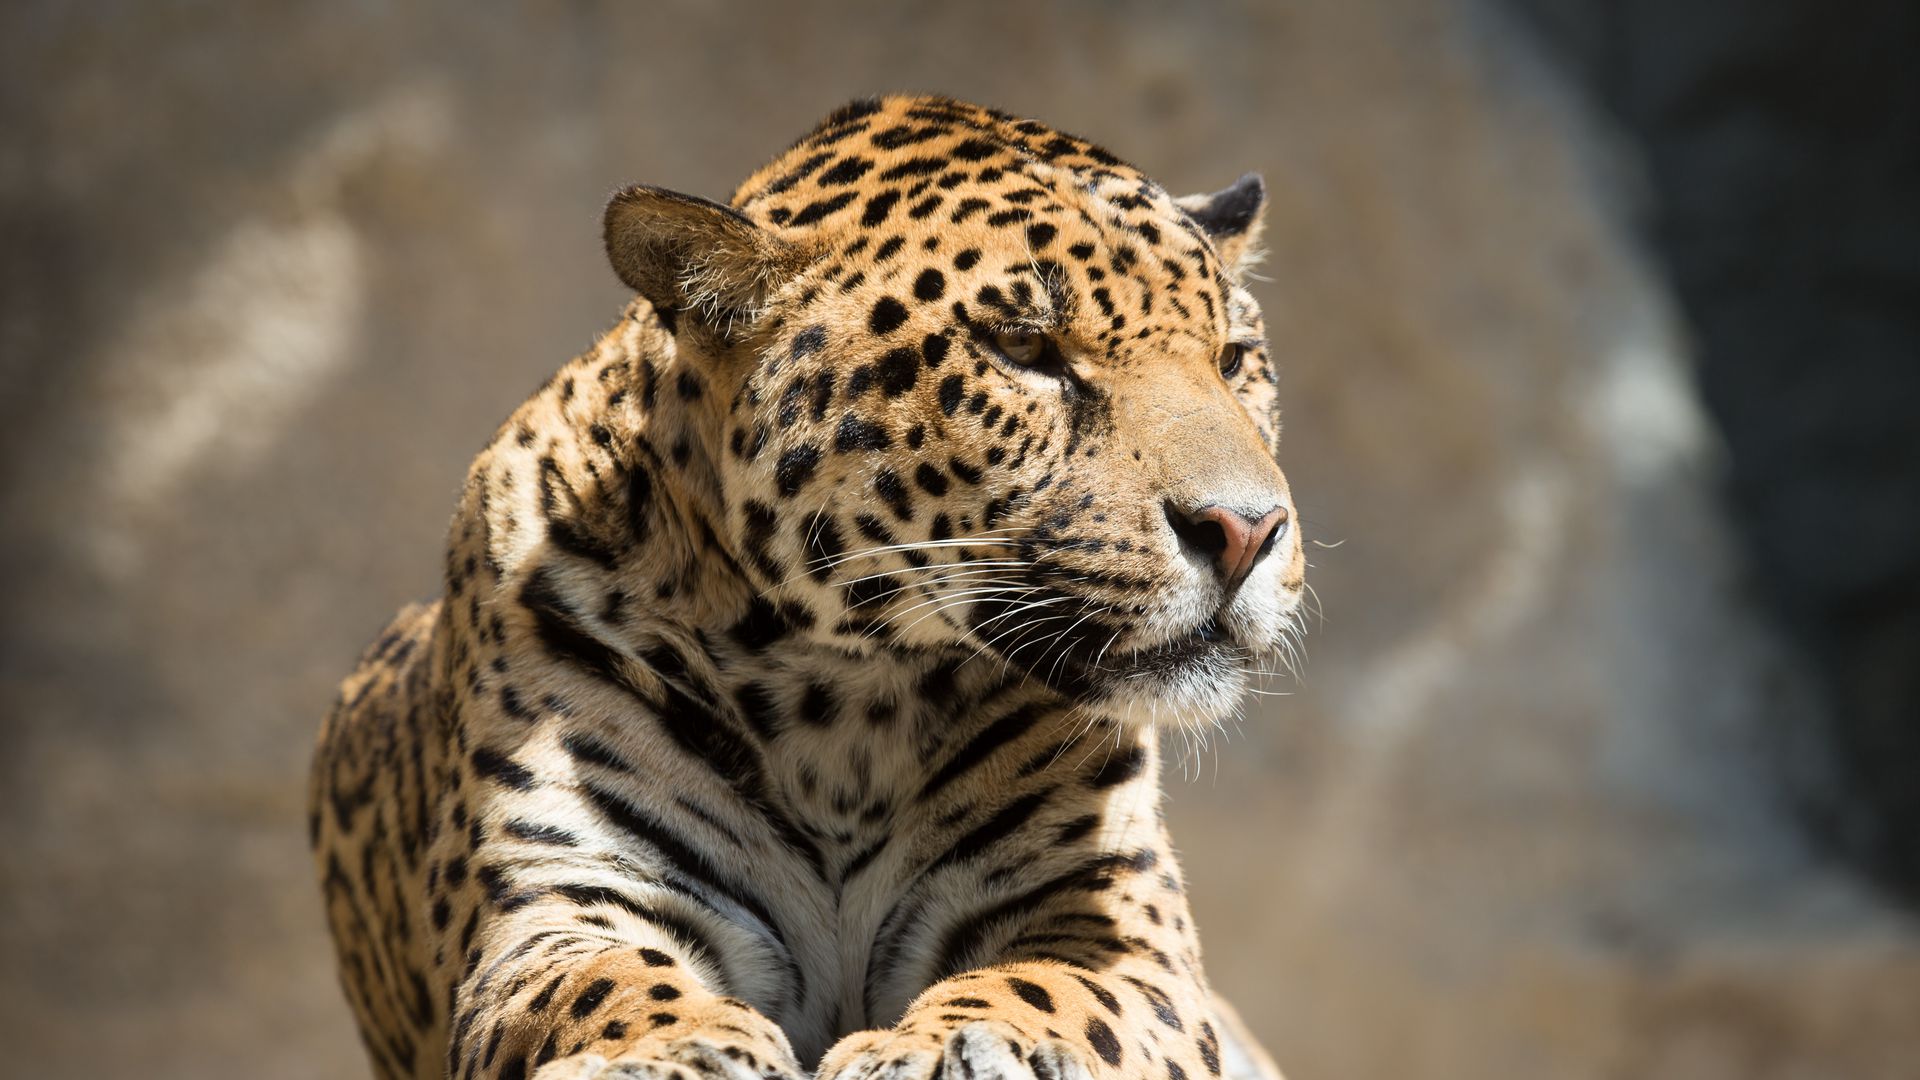 Download wallpaper 1920x1080 jaguar, animal, predator, lying, big cat full  hd, hdtv, fhd, 1080p hd background